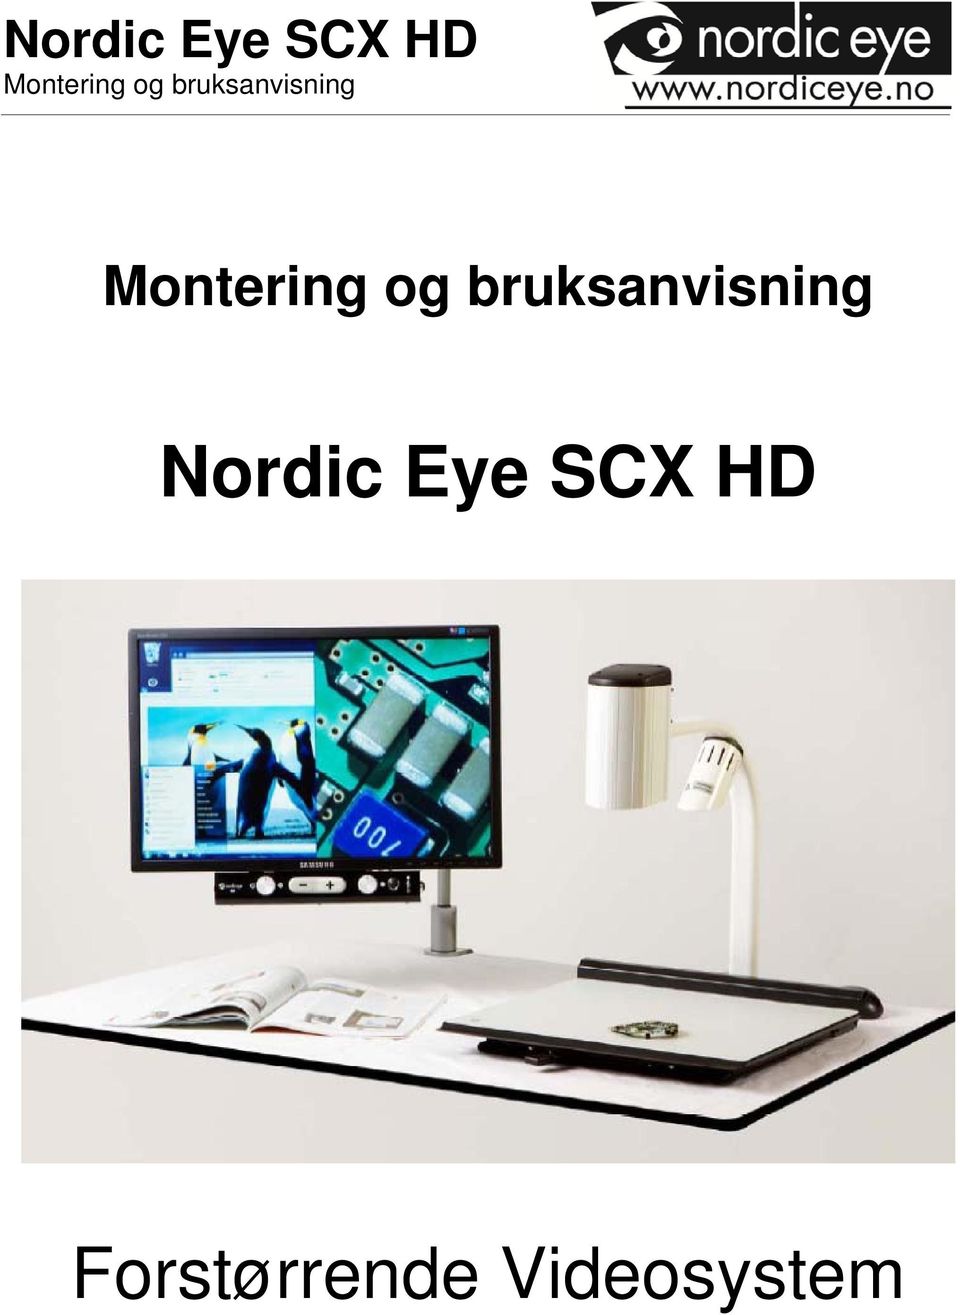 Nordic Eye SCX HD